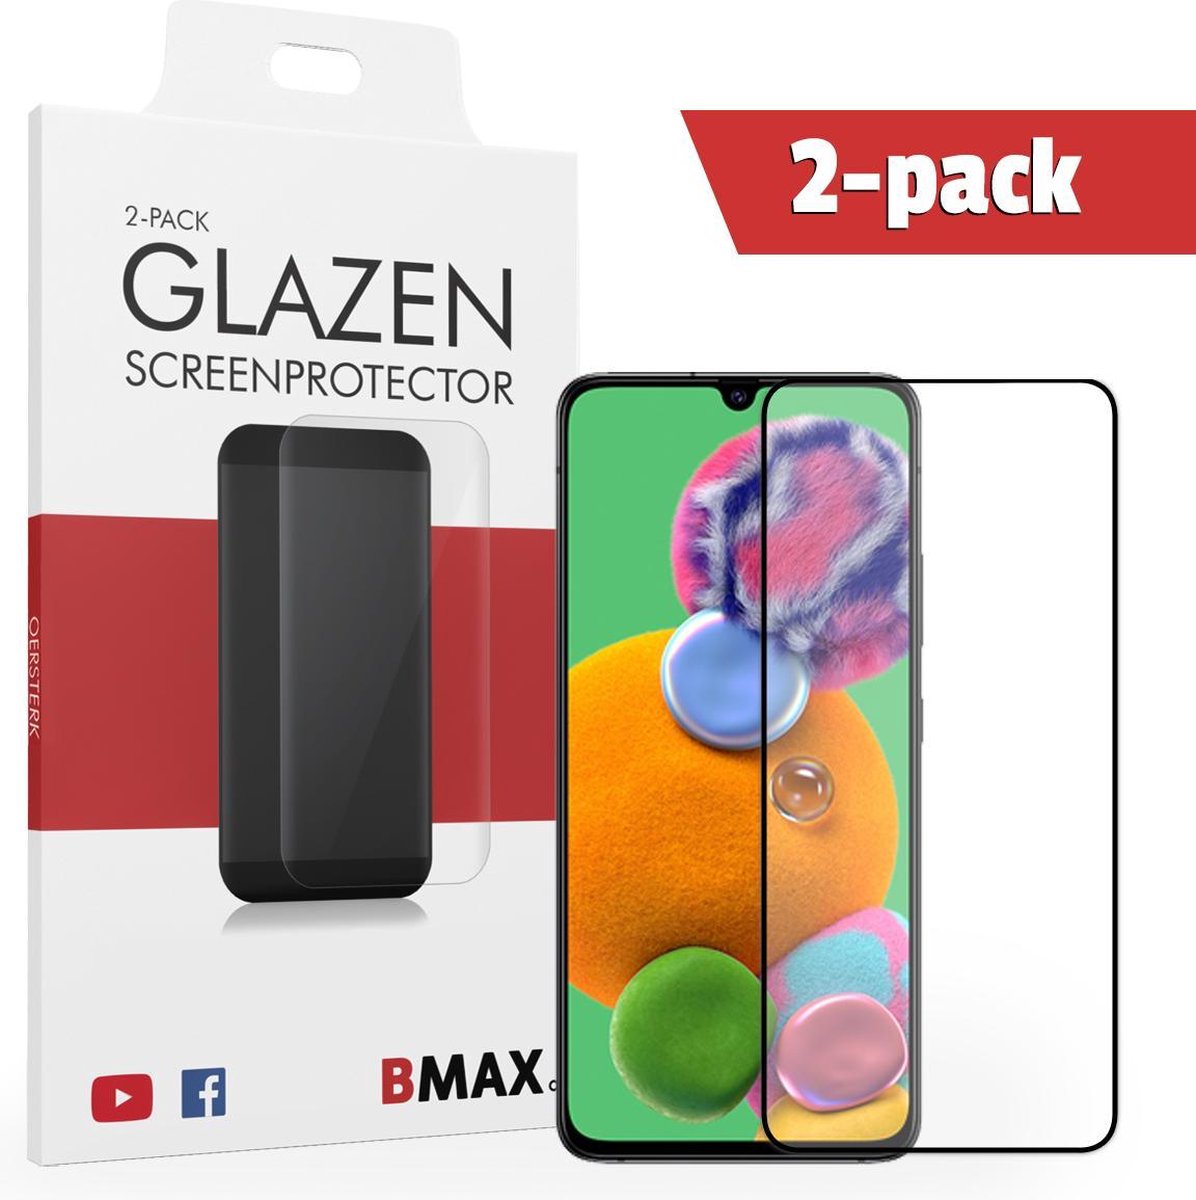 2-pack Bmax Samsung Galaxy A90 Screenprotector - Glass - Full Cover 2.5d - Black